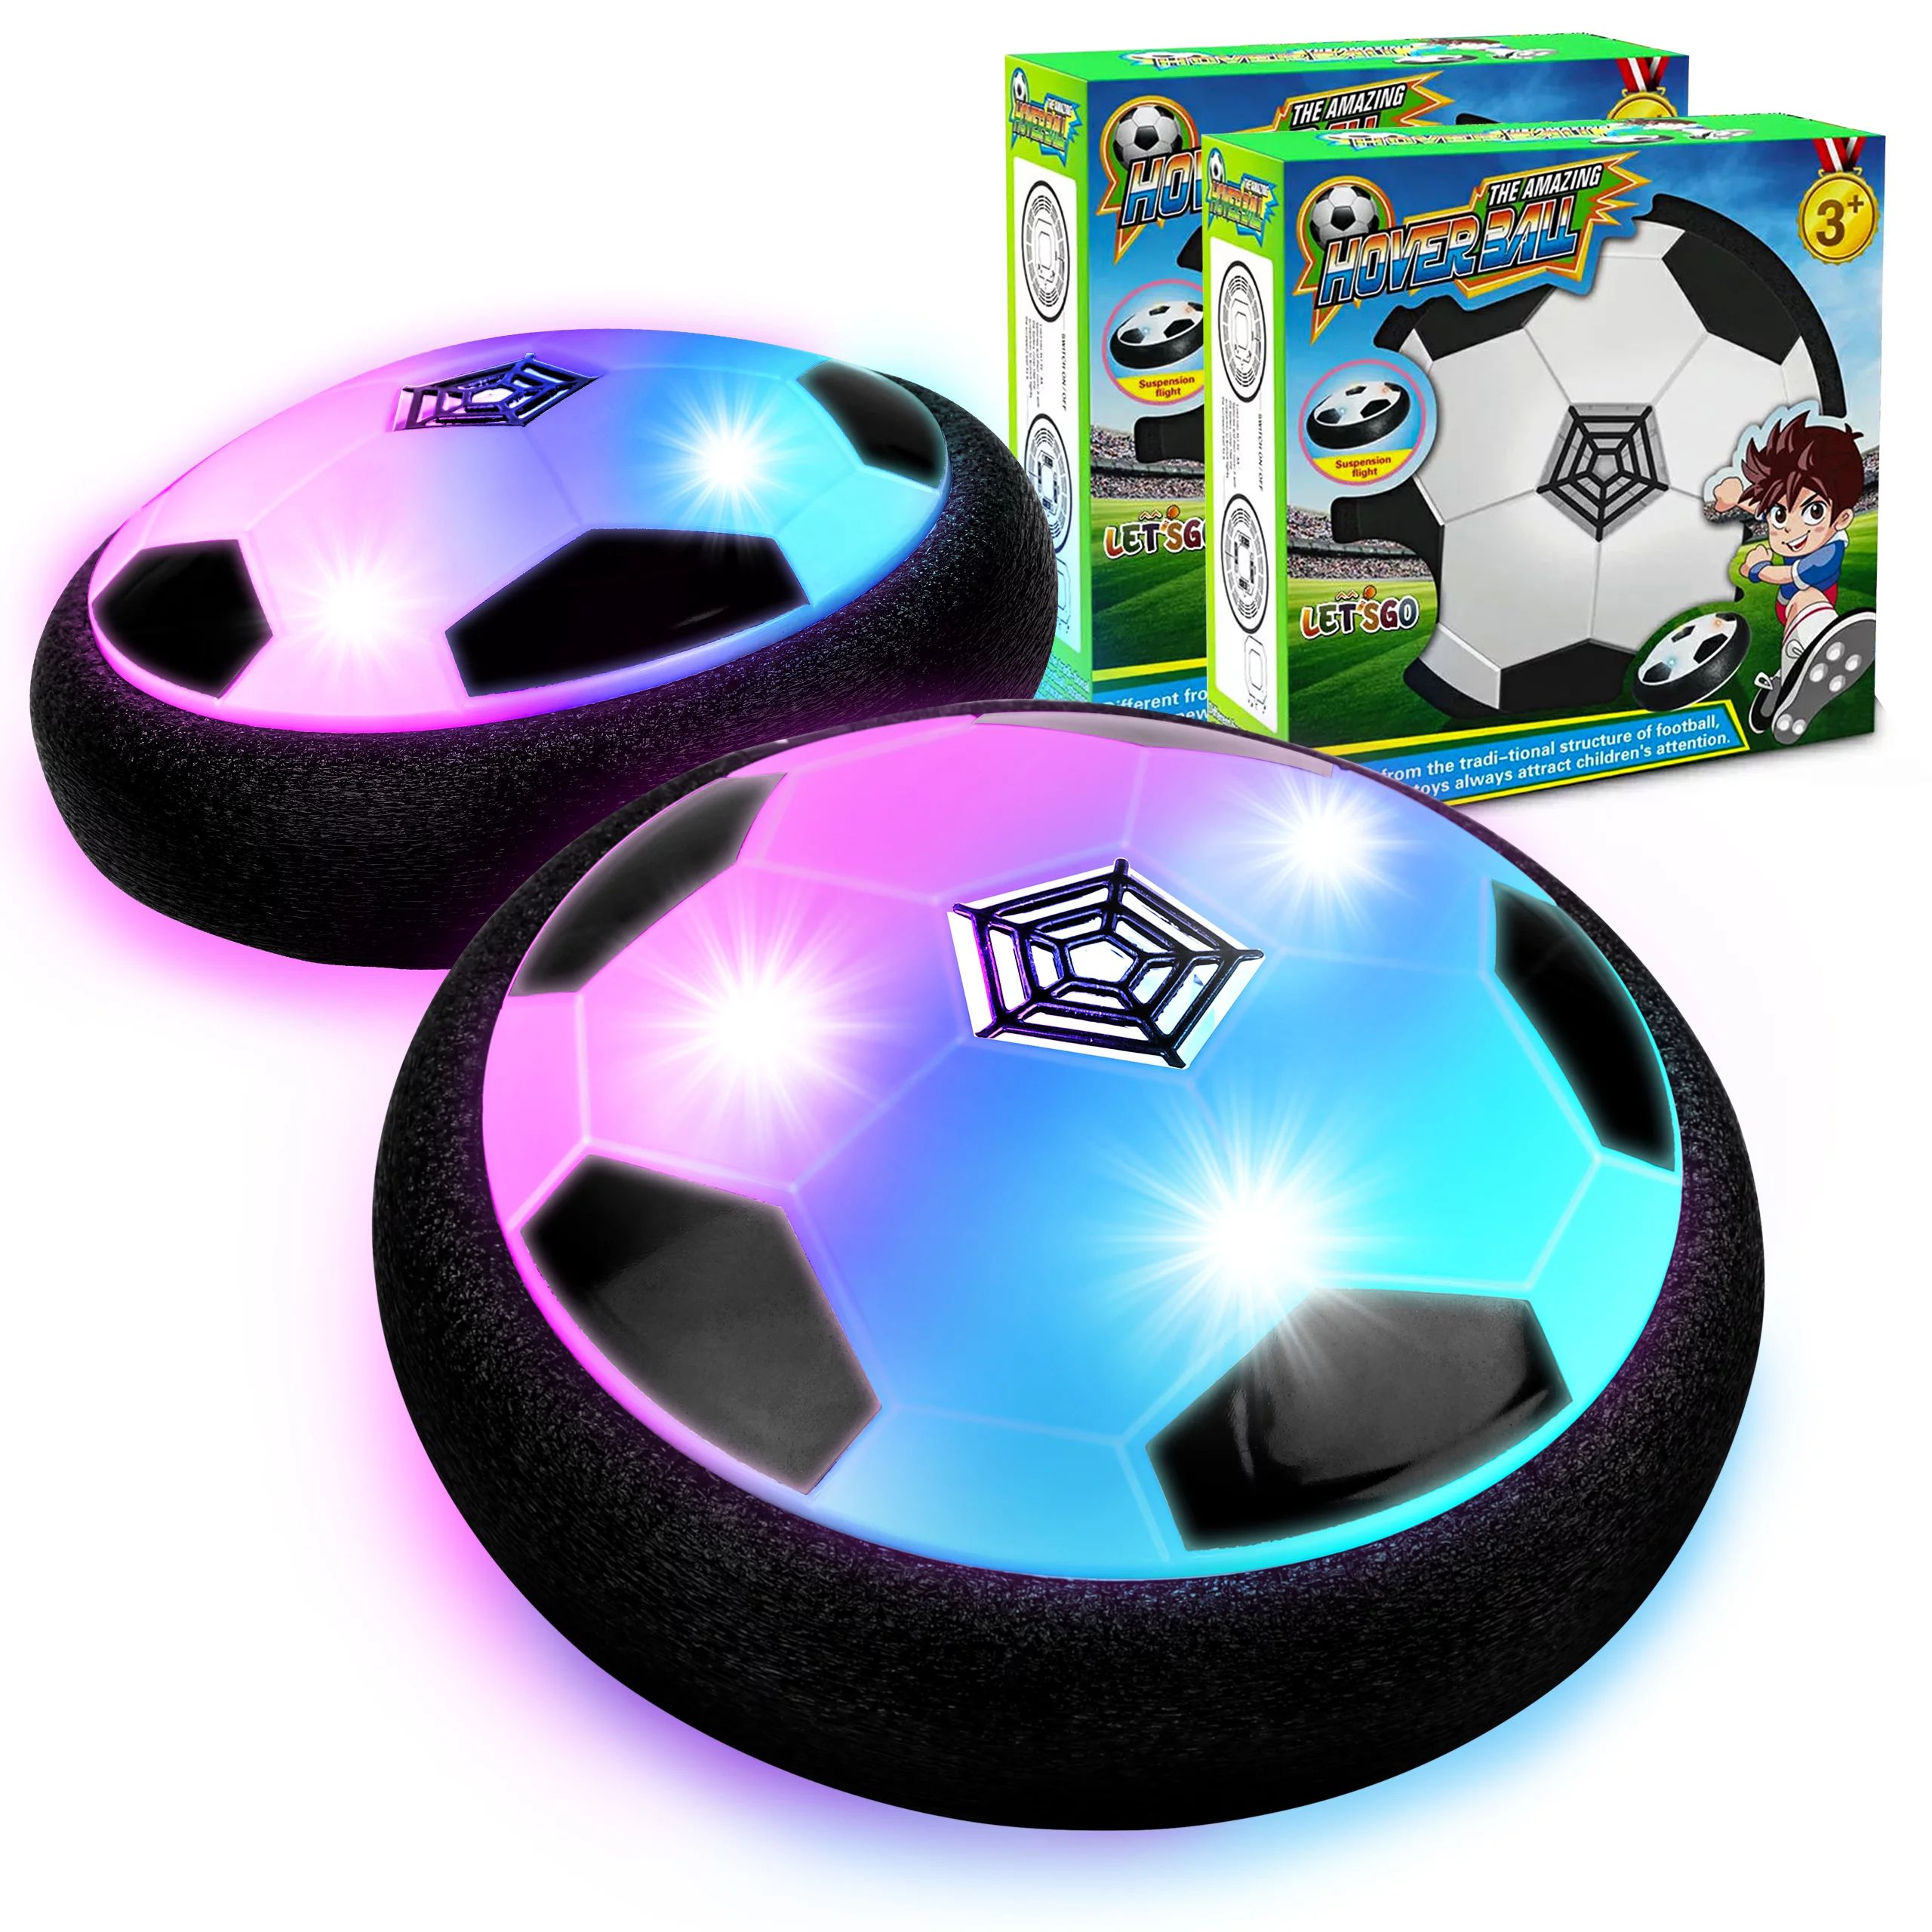 Hot Bee Hover Ball Toys for Boys & Girls - 2 LED Soccer Balls Indoor/Outdoor Games for Kids 3+ Ye... | Walmart (US)